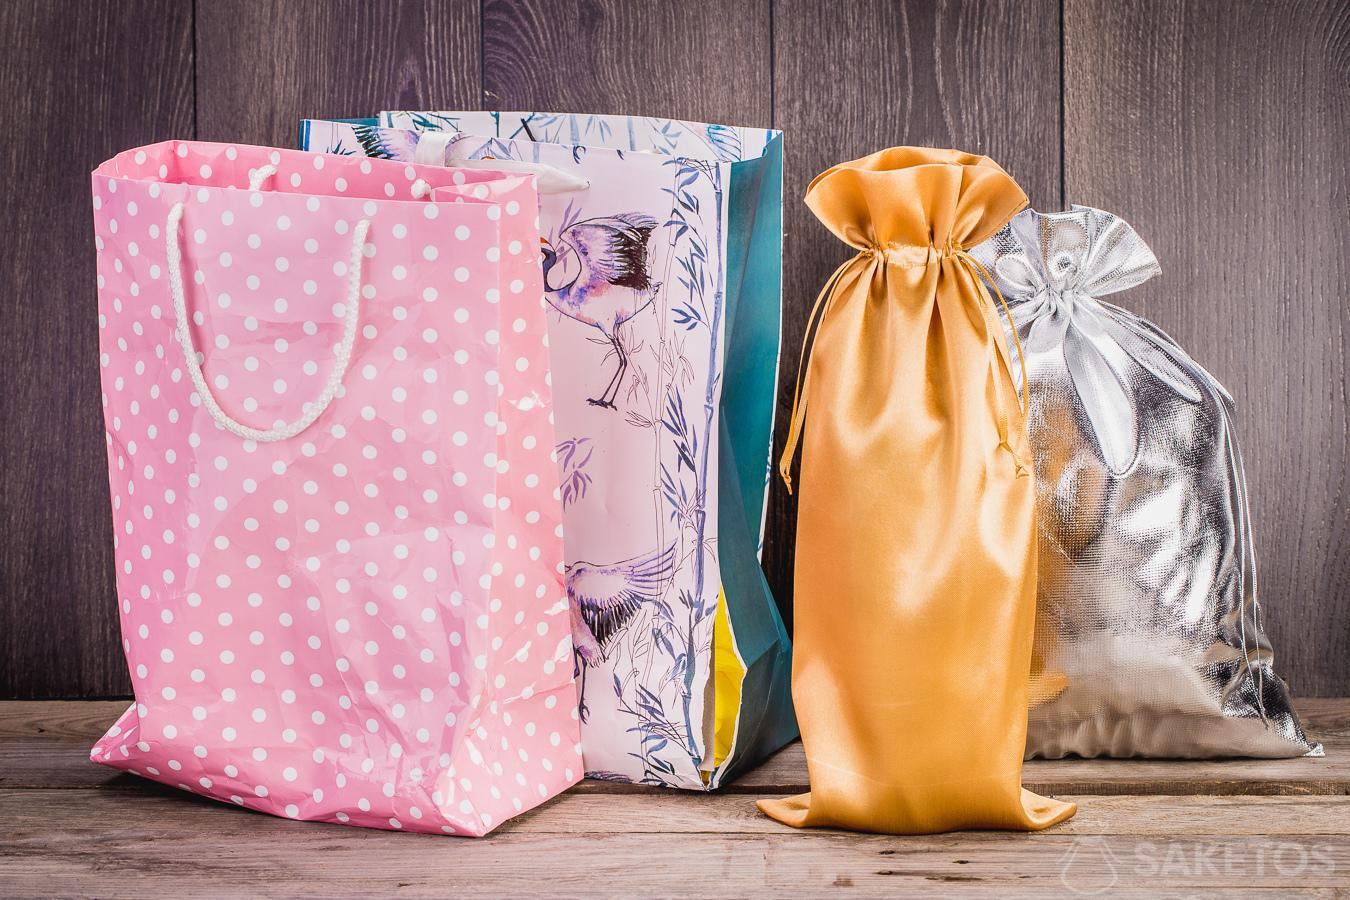 5 motivi per sostituire i sacchetti di carta - Saketos Blog